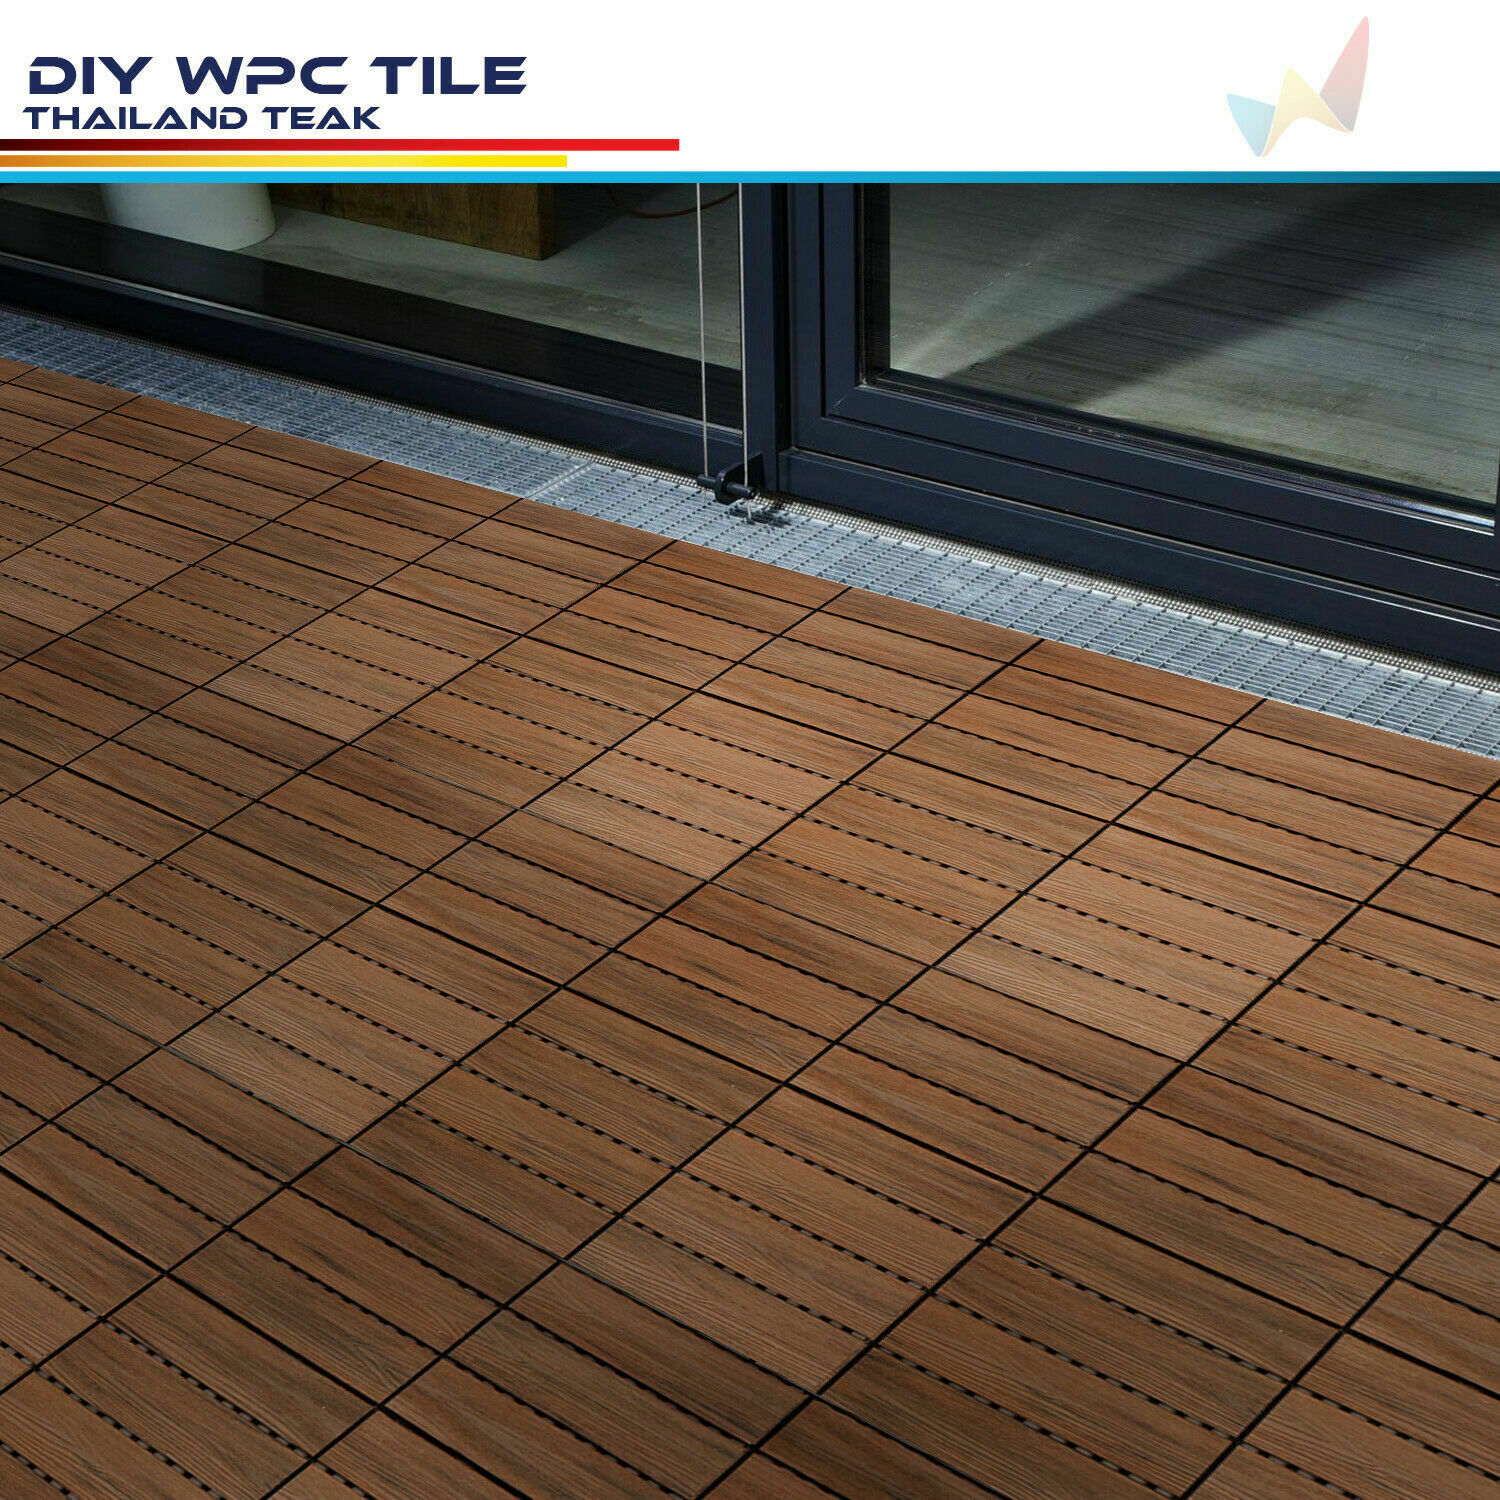 Deck Patio Tiles Interlocking Wood Flooring Pavers Tiles Outdoor 12”x12” 20x20